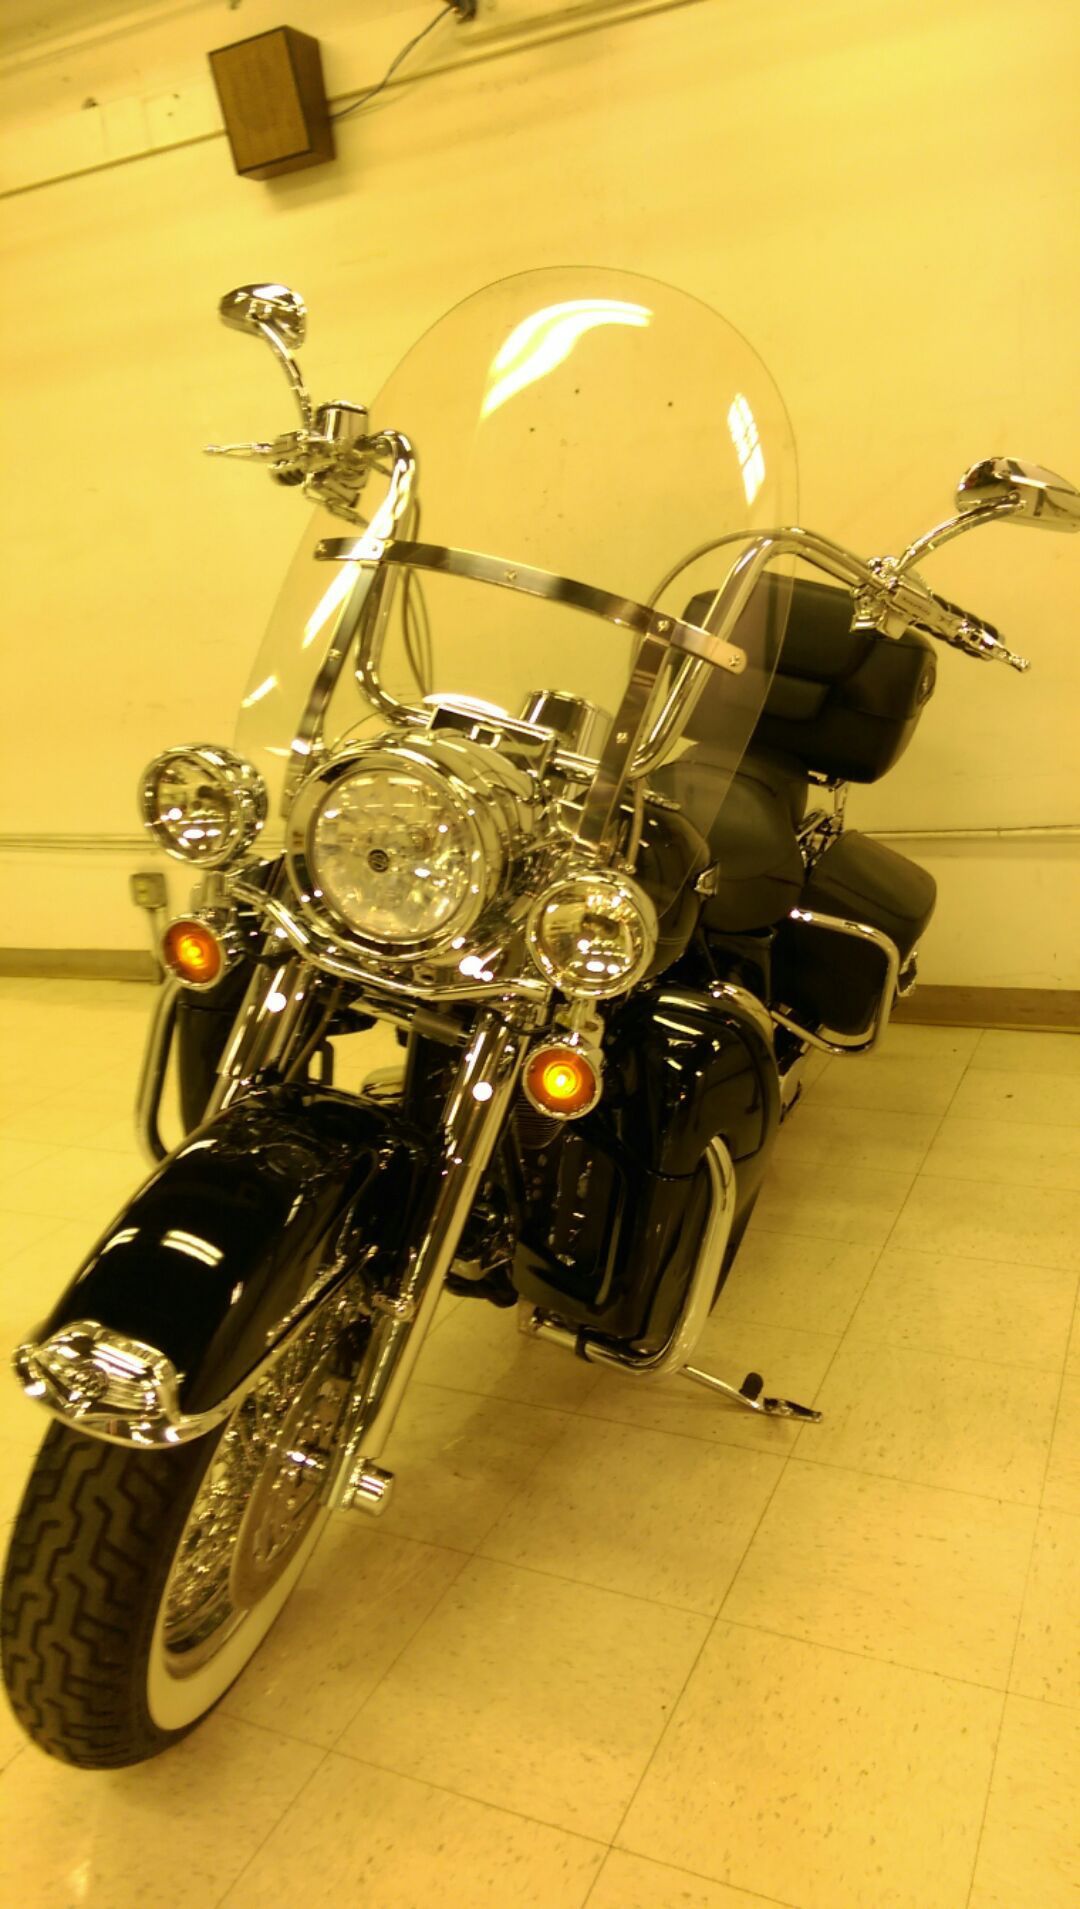 2005 Harley Davidson pristine condition extra saddle bags